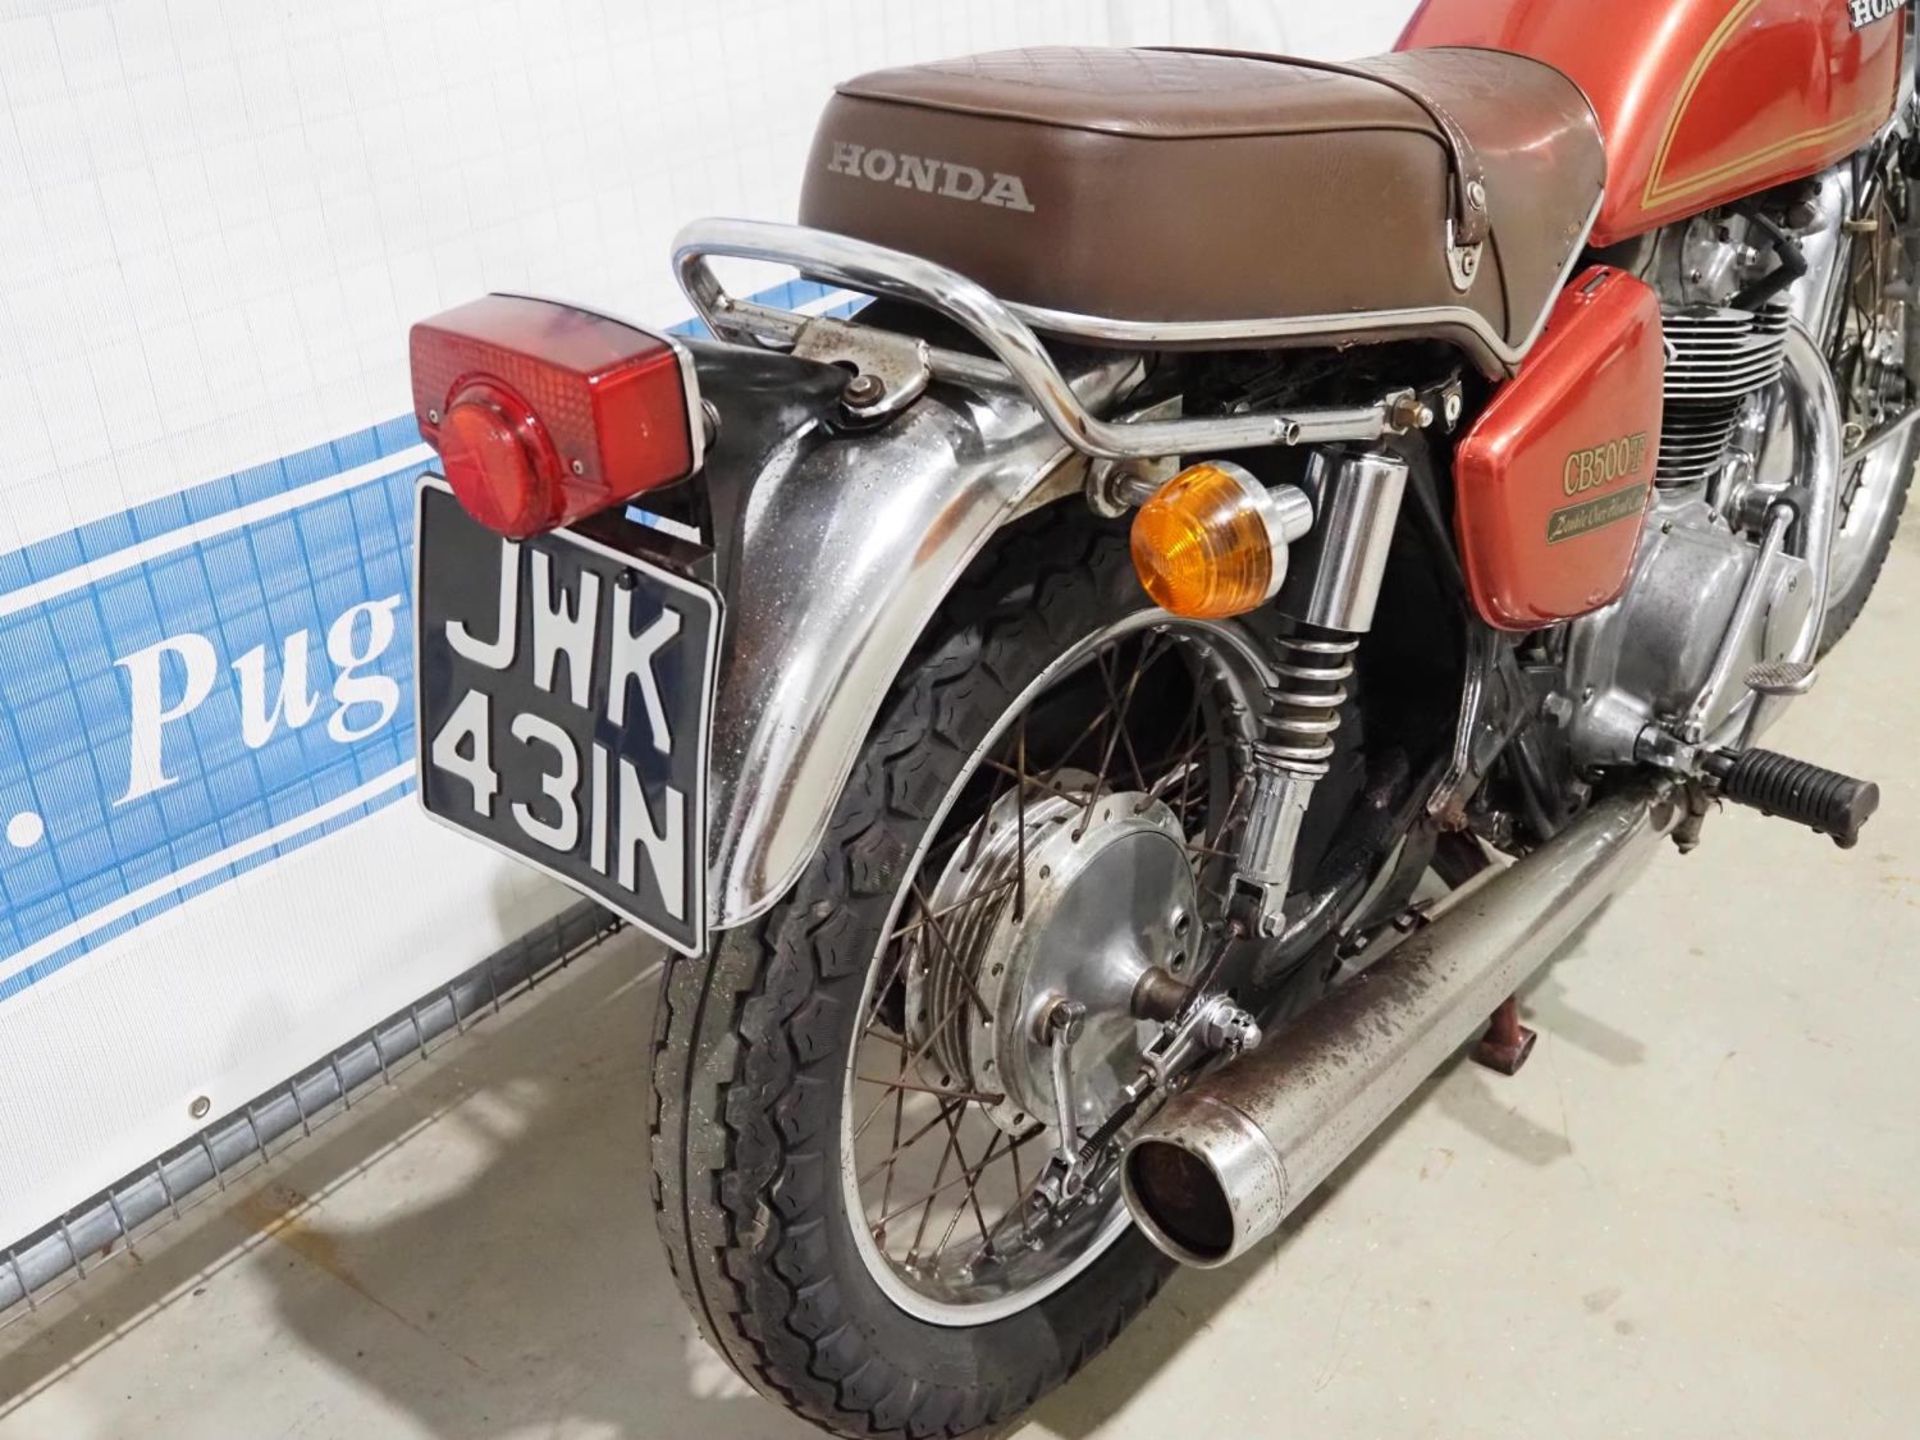 Honda CB500T motorcycle. 1975. Front brake needs sorting. Reg. JWK 431N. V5, key - Image 6 of 7